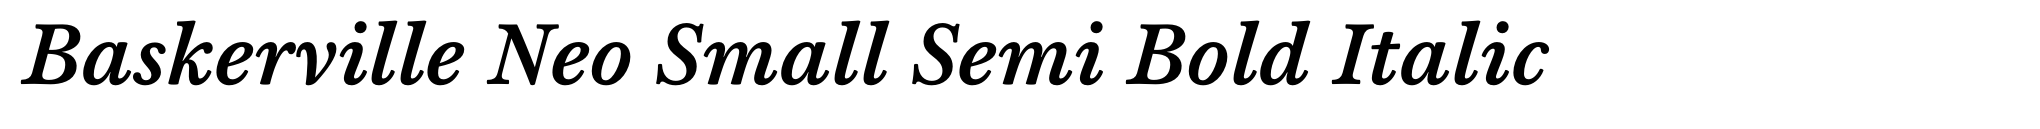 Baskerville Neo Small Semi Bold Italic image